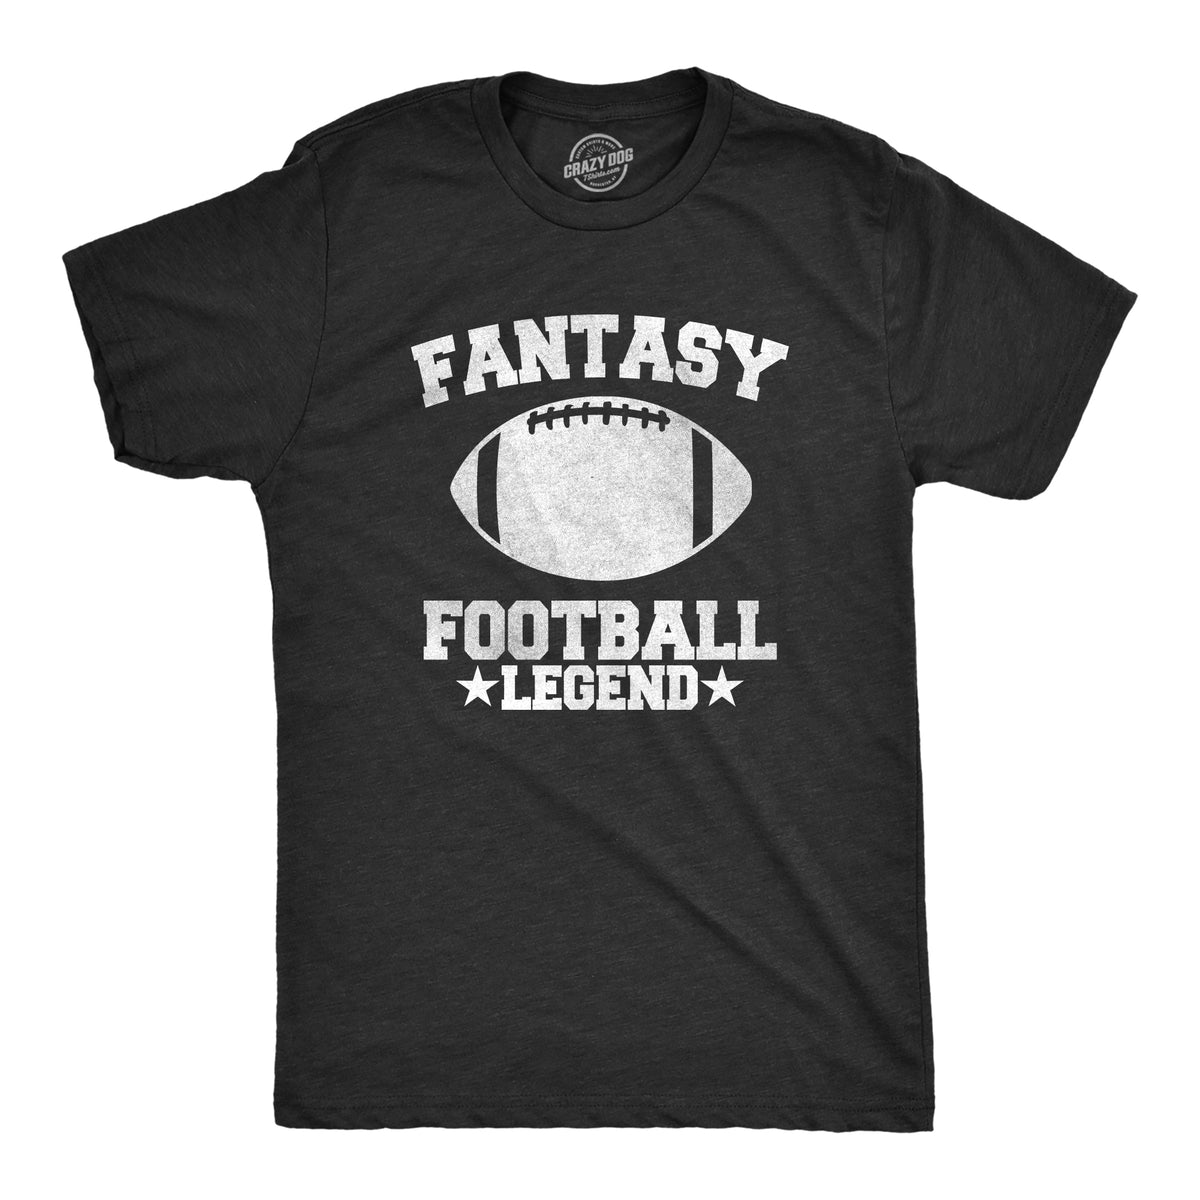 Funny Heather Black Fantasy Football Legend Mens T Shirt Nerdy Football Tee